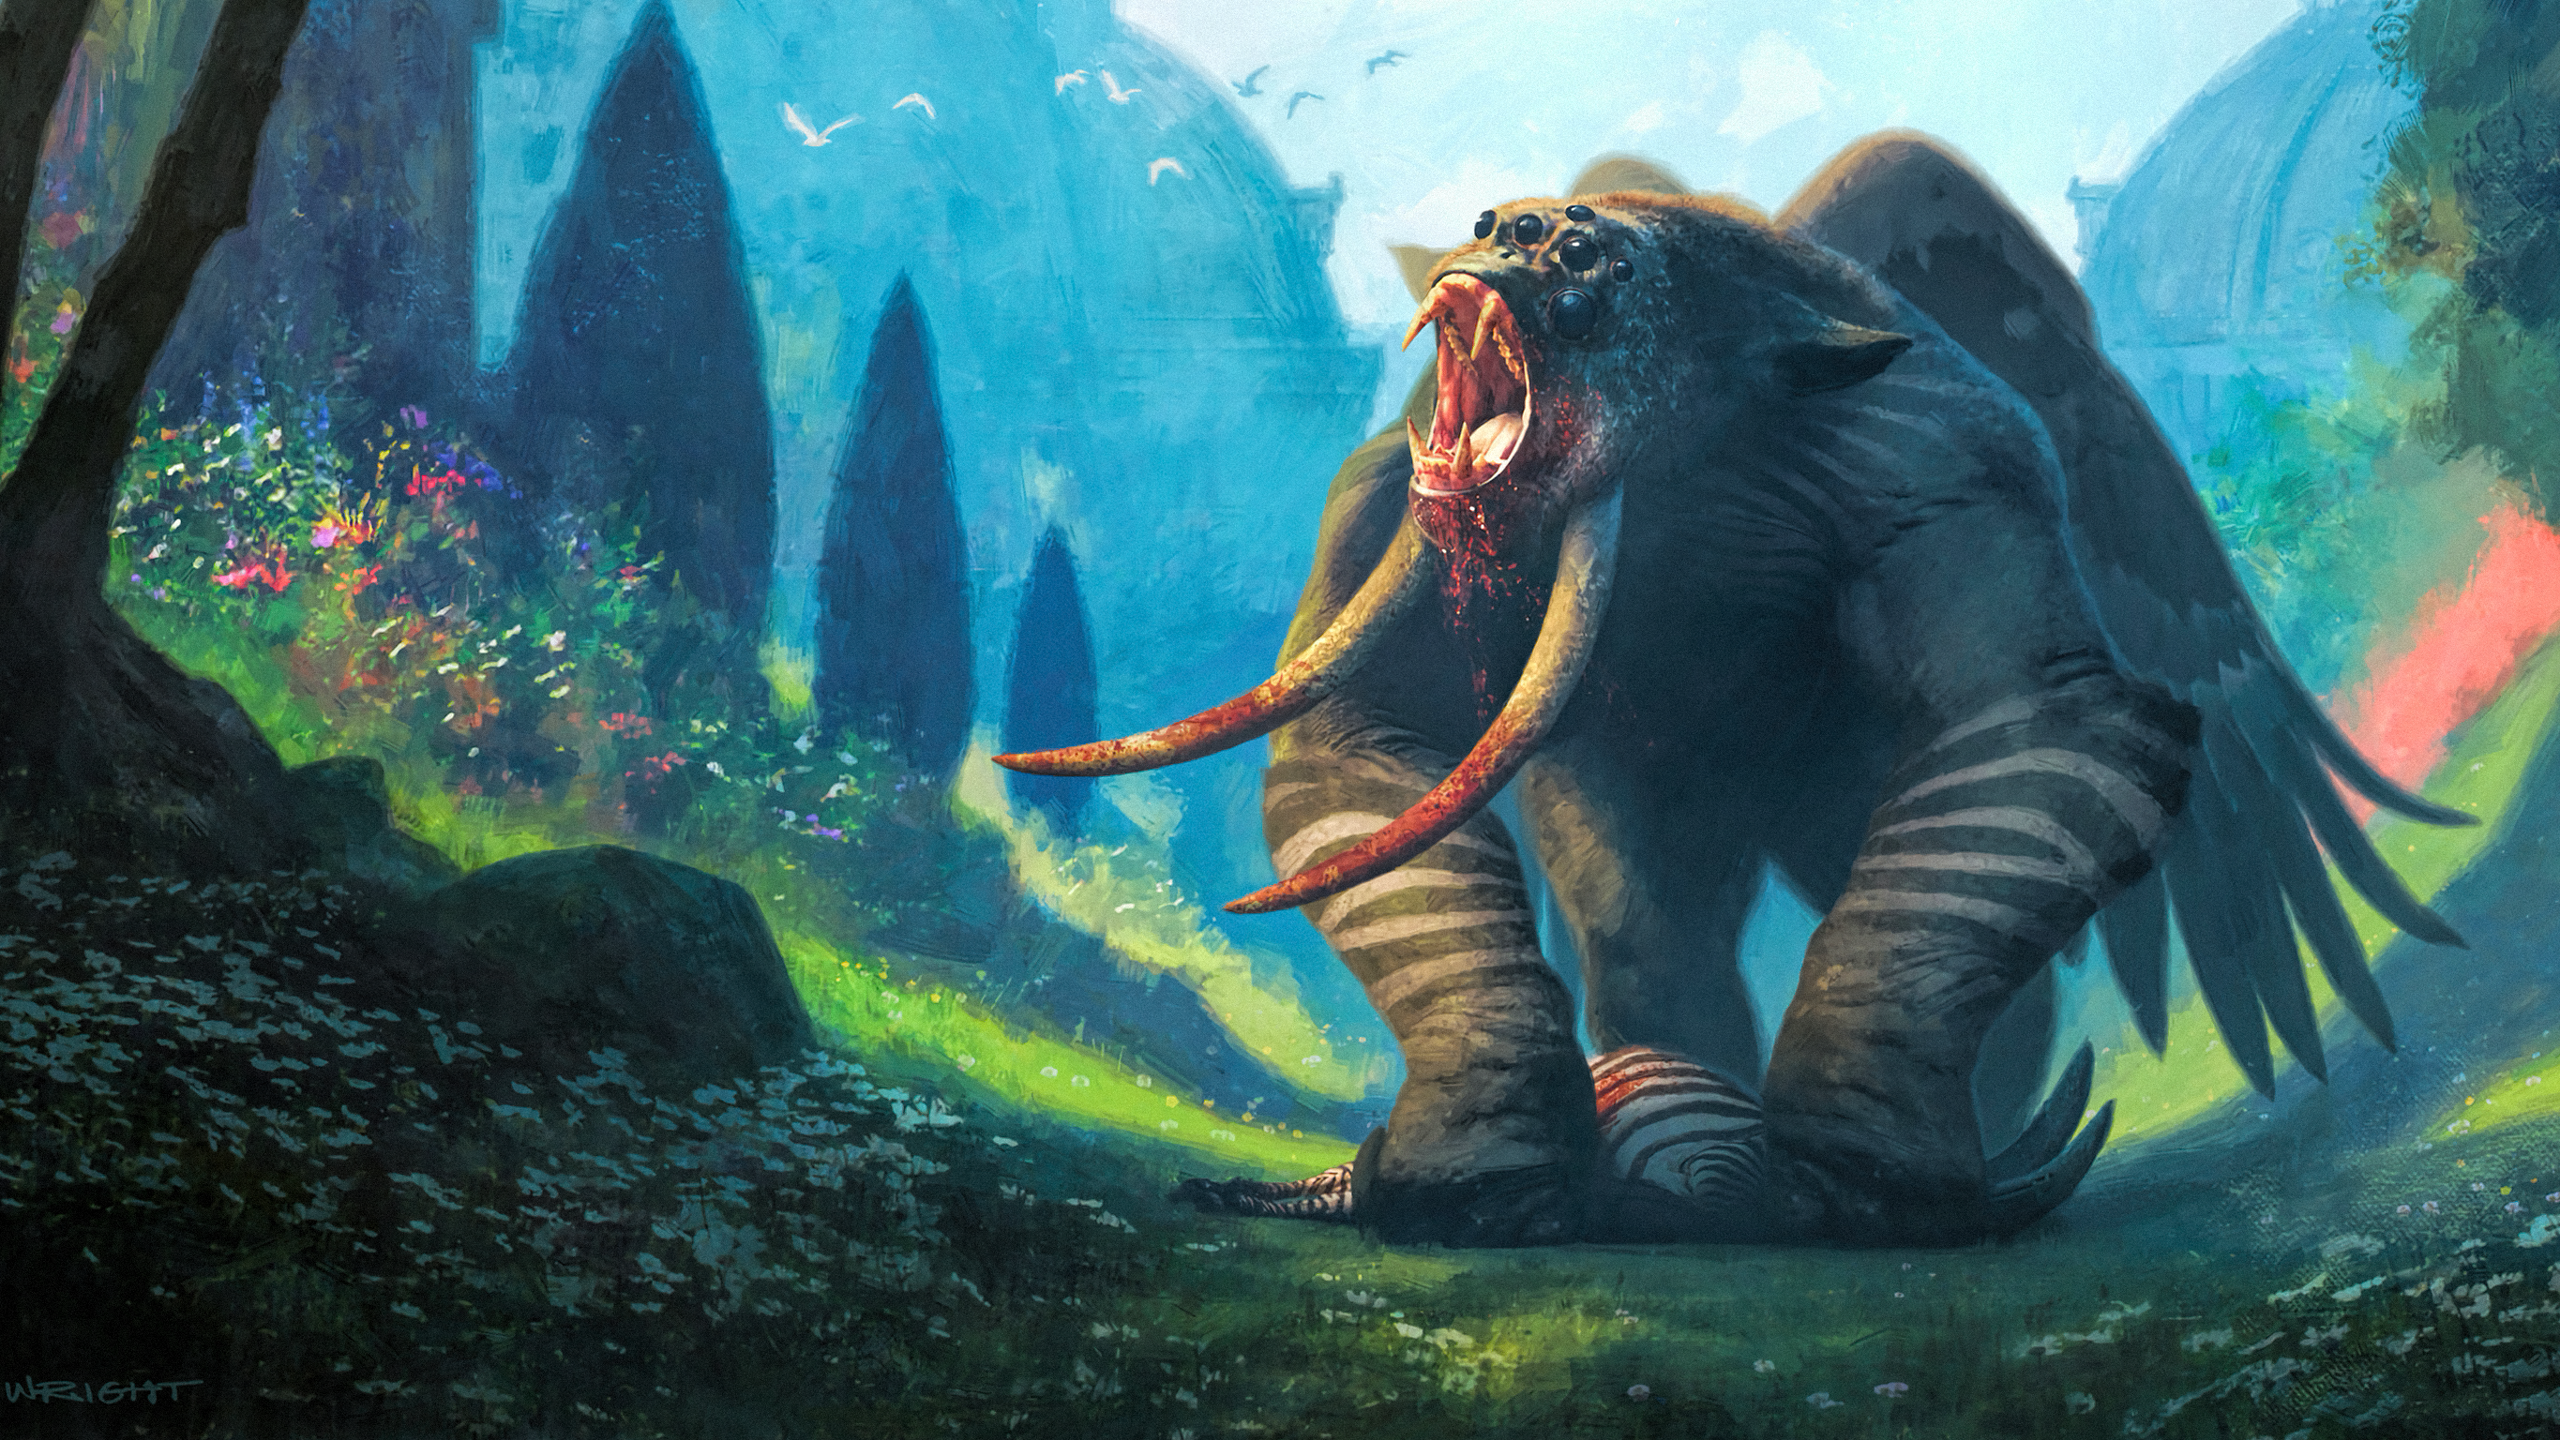 Richard Wright Fantasy Art Creature Mutant Gorillas Forest Fictional Creatures 2560x1440